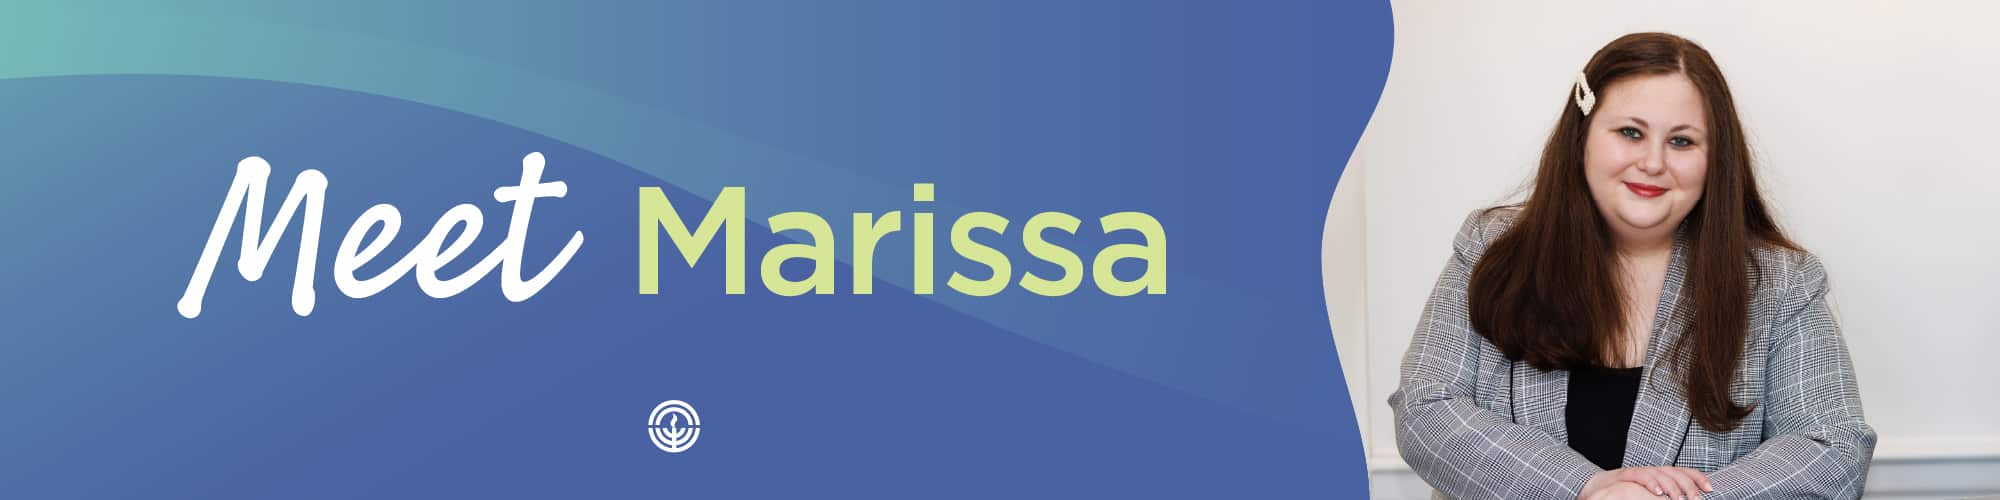 Meet Marissa: Advocating for an Inclusive Jewish Community